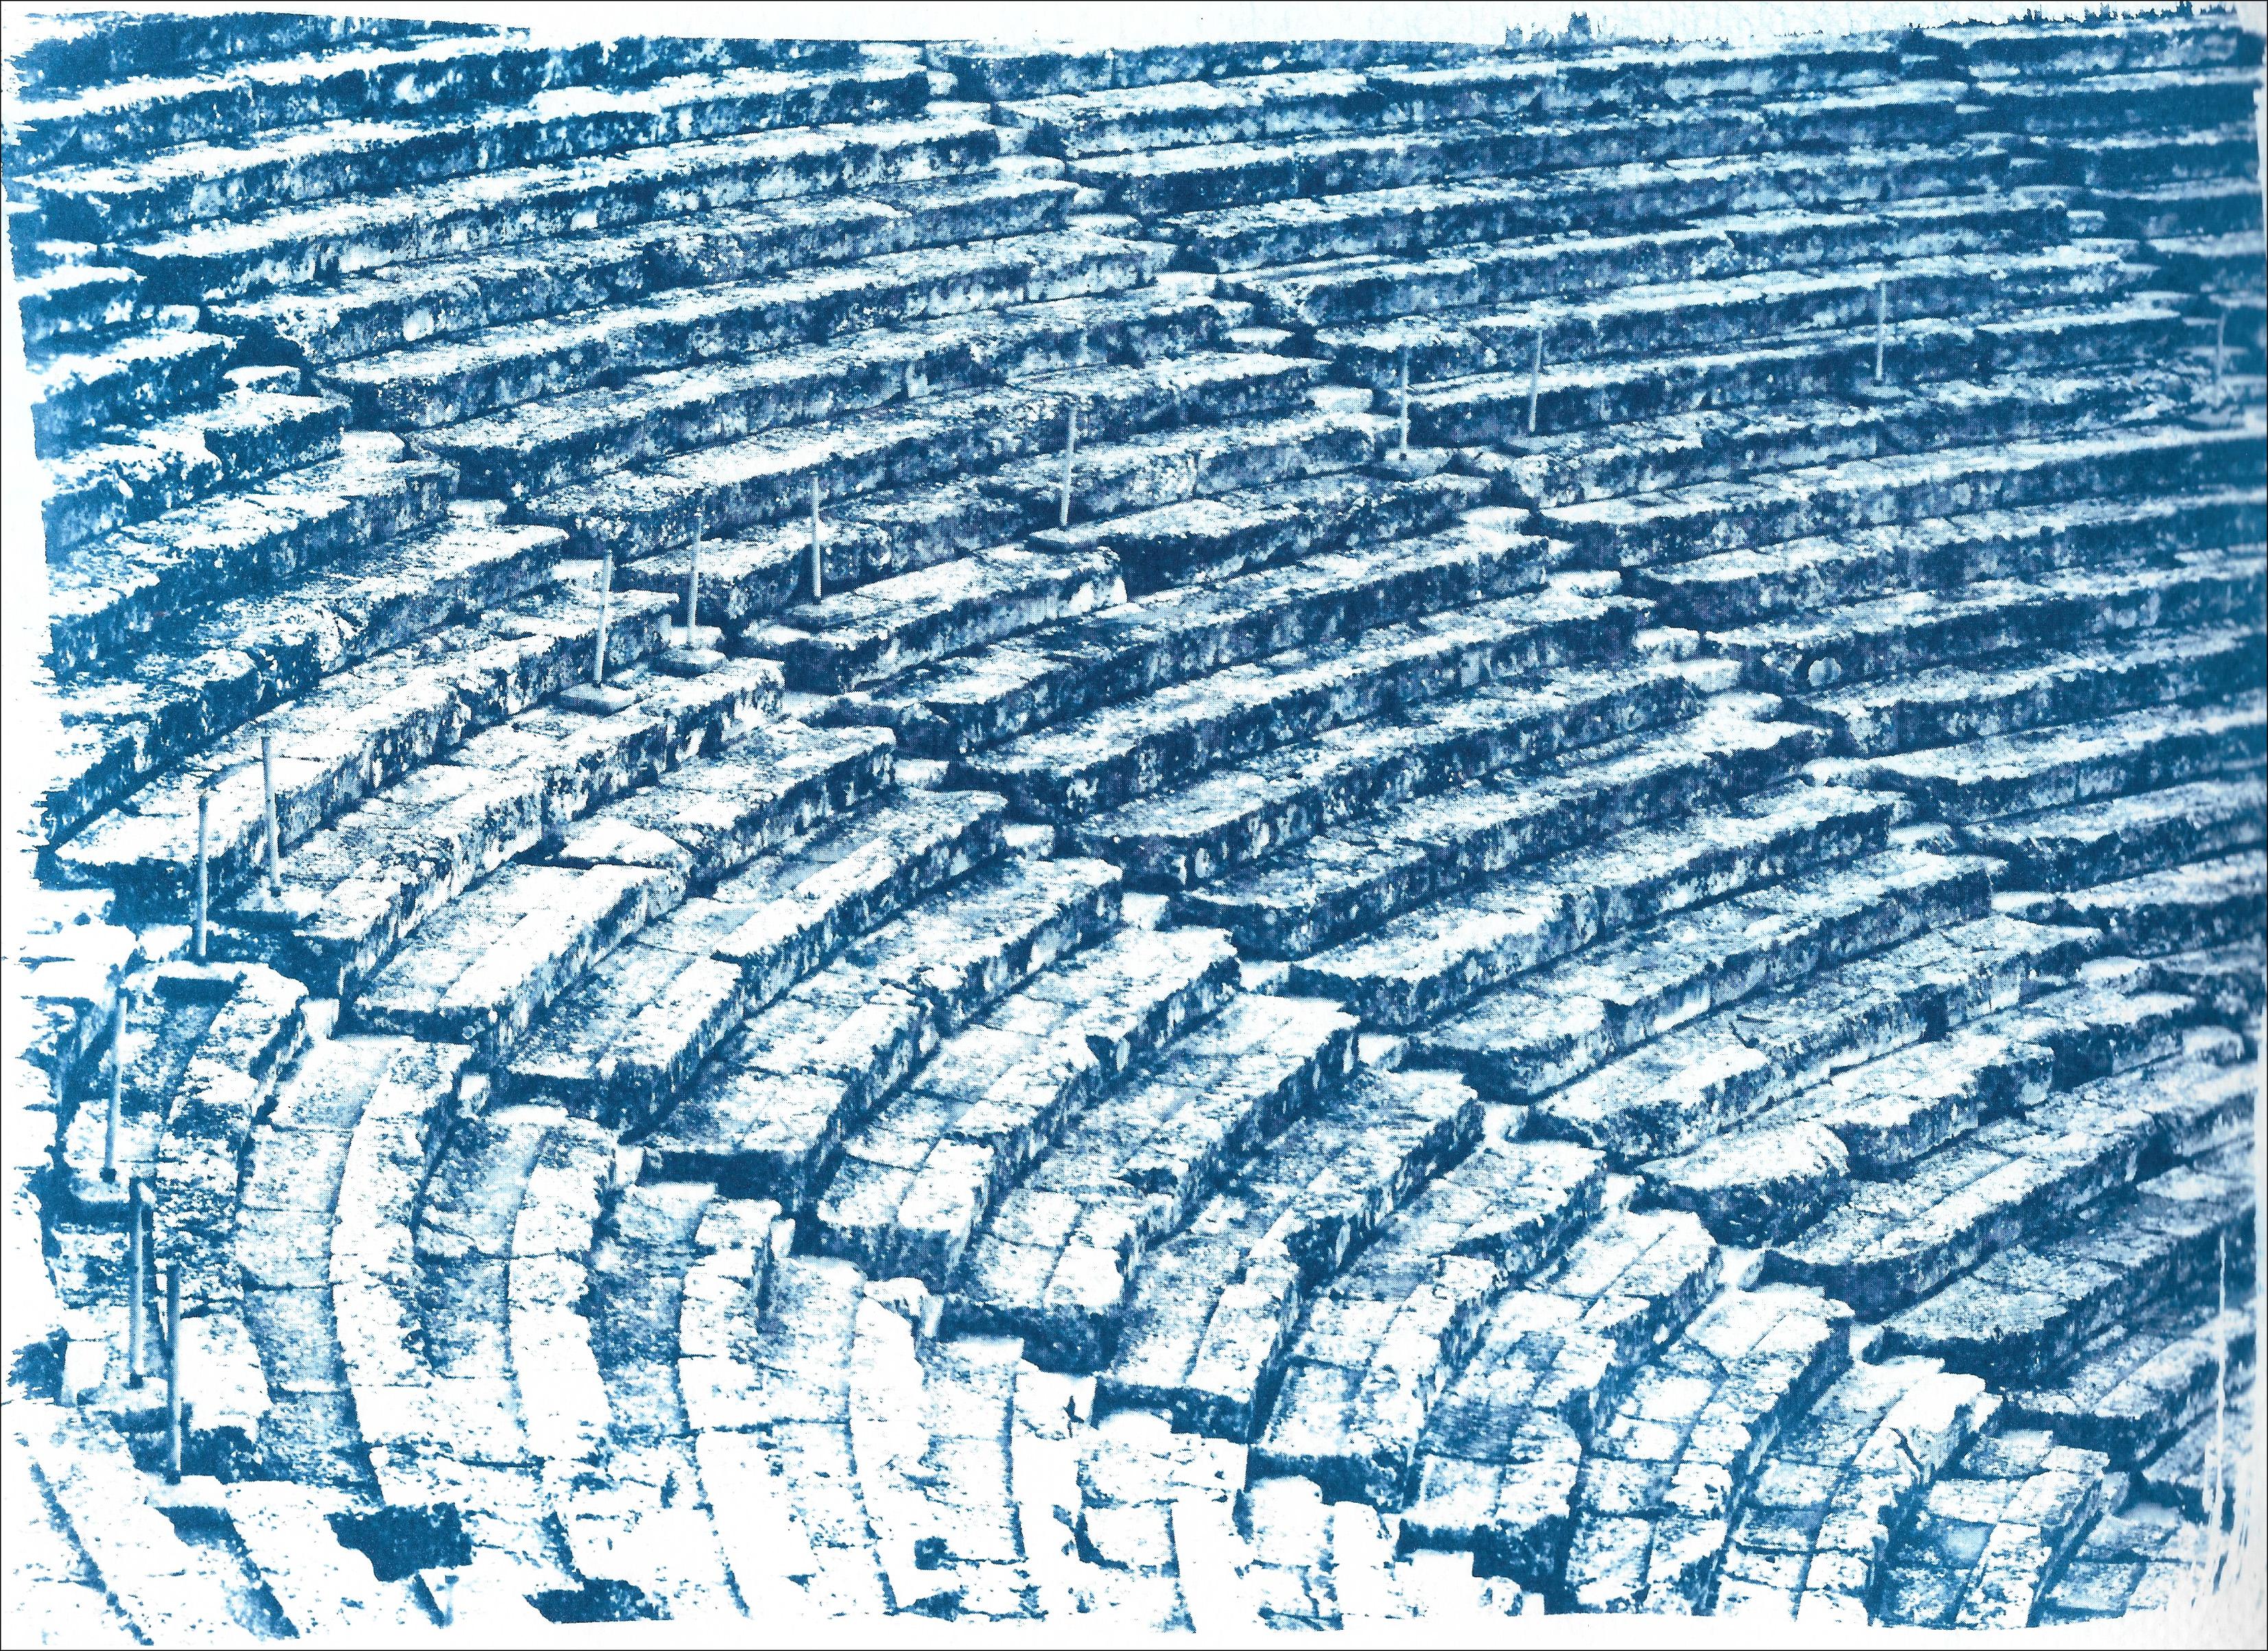 Ancient Roman Amphitheater in Blue, Greek Architecture Handmade Cyanotype Print